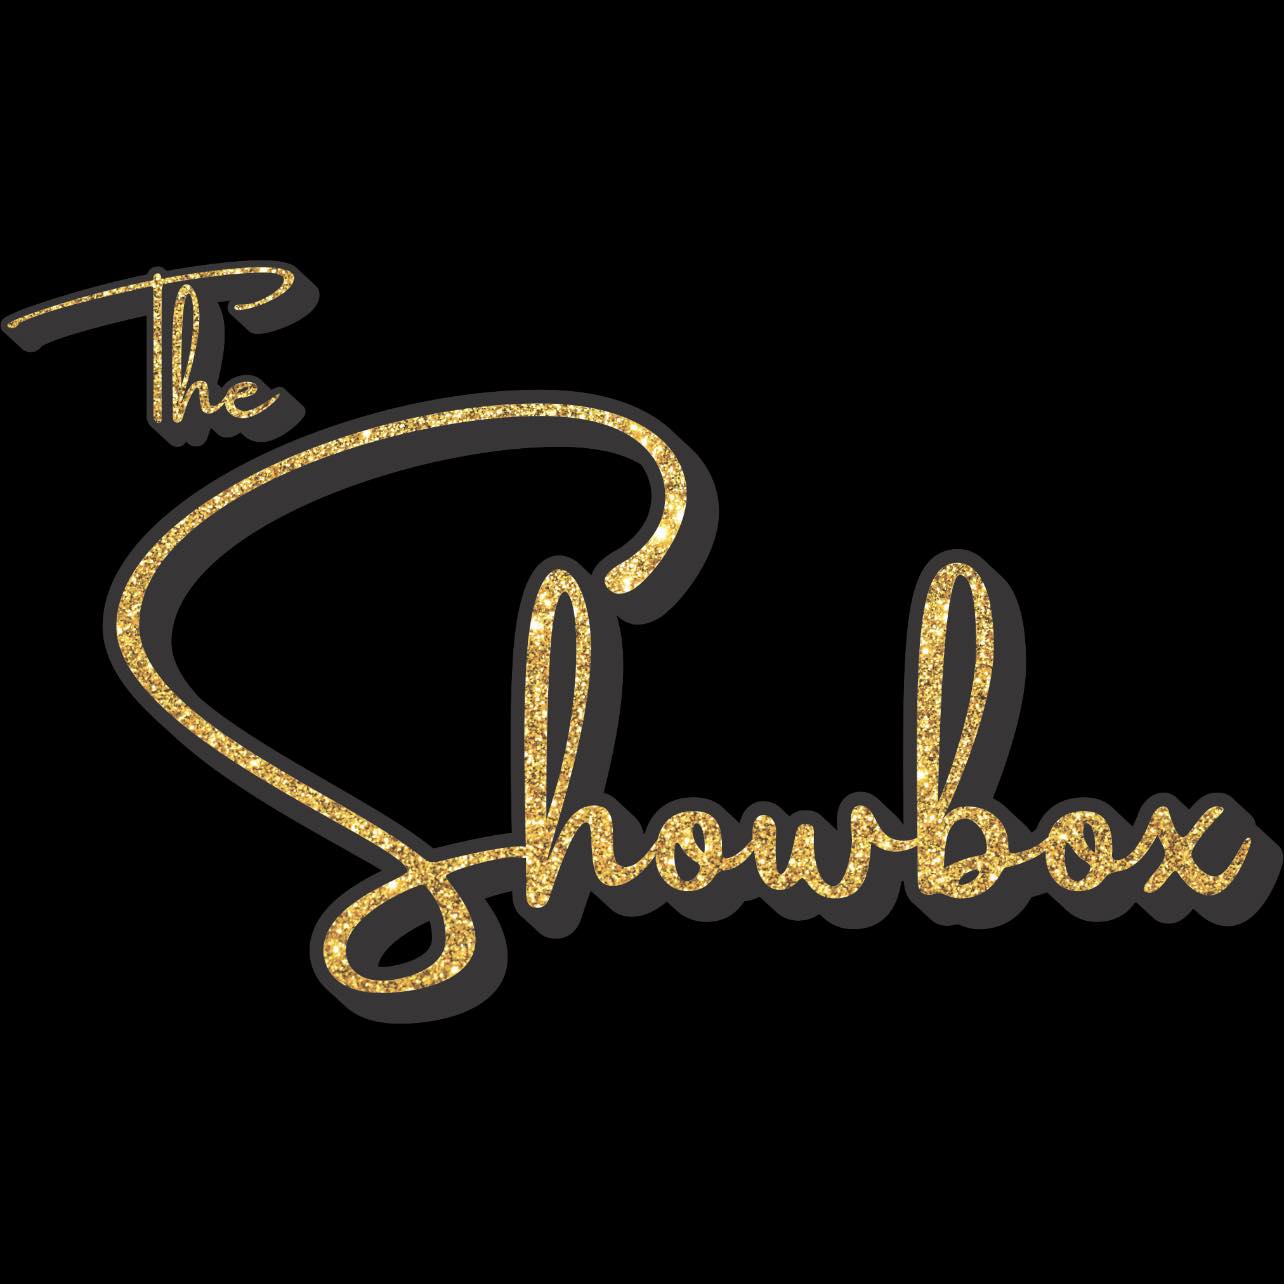 The Showbox